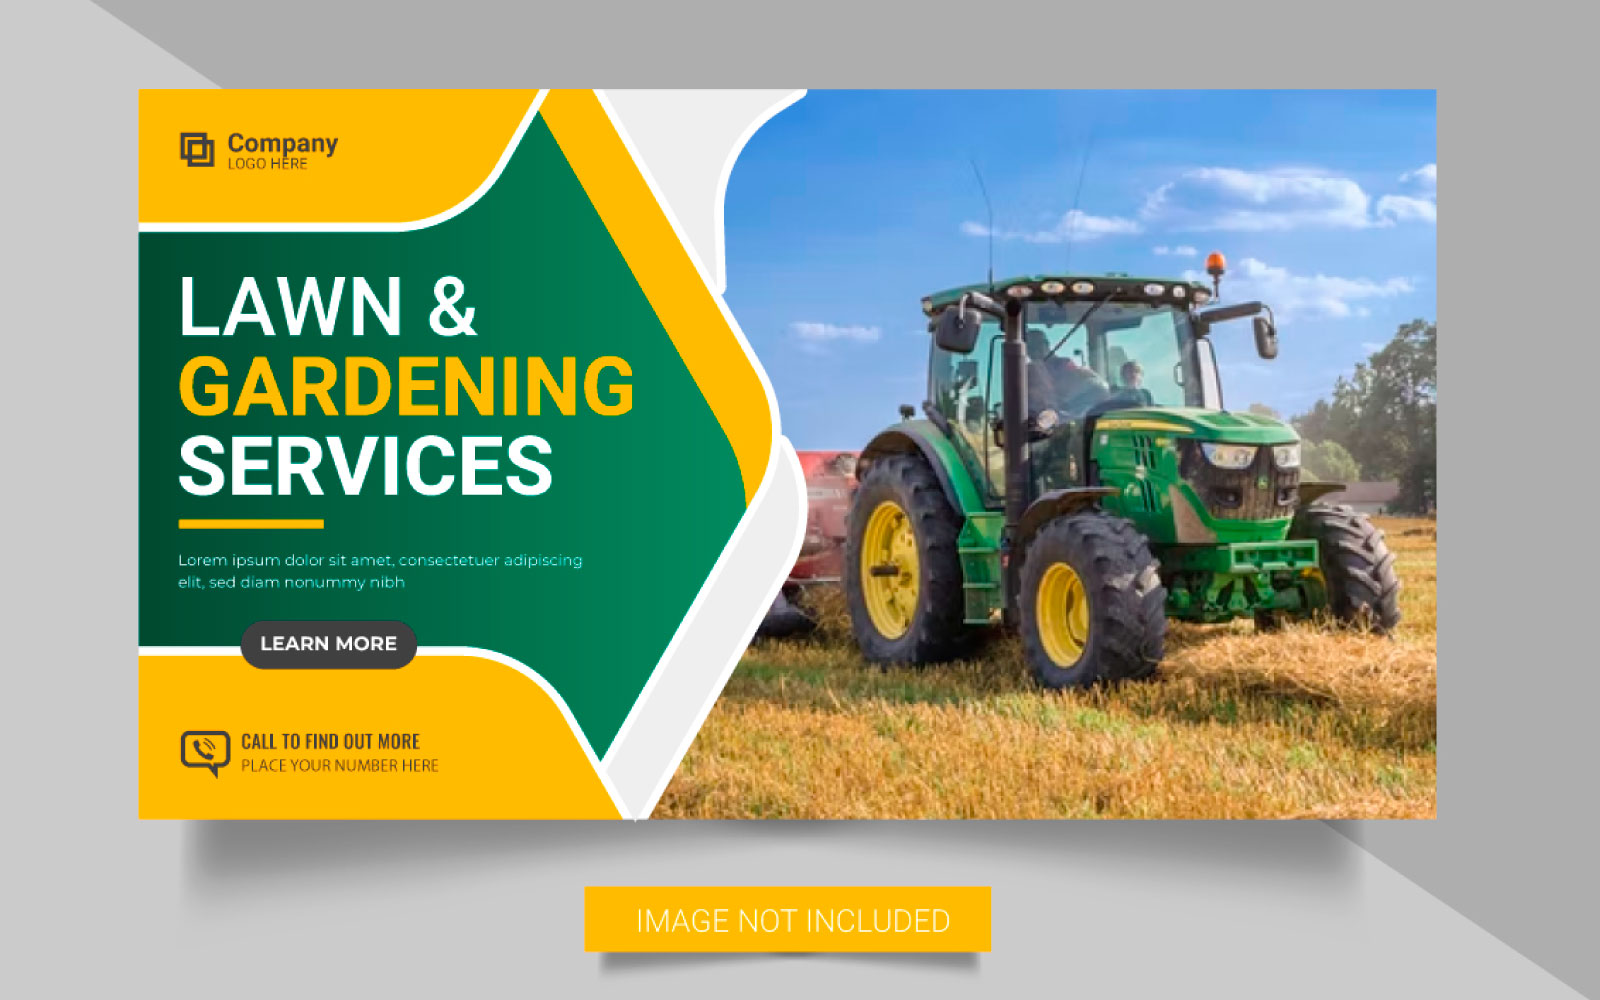 Agriculture service web banner  or lawn mower gardening social media post banner  design